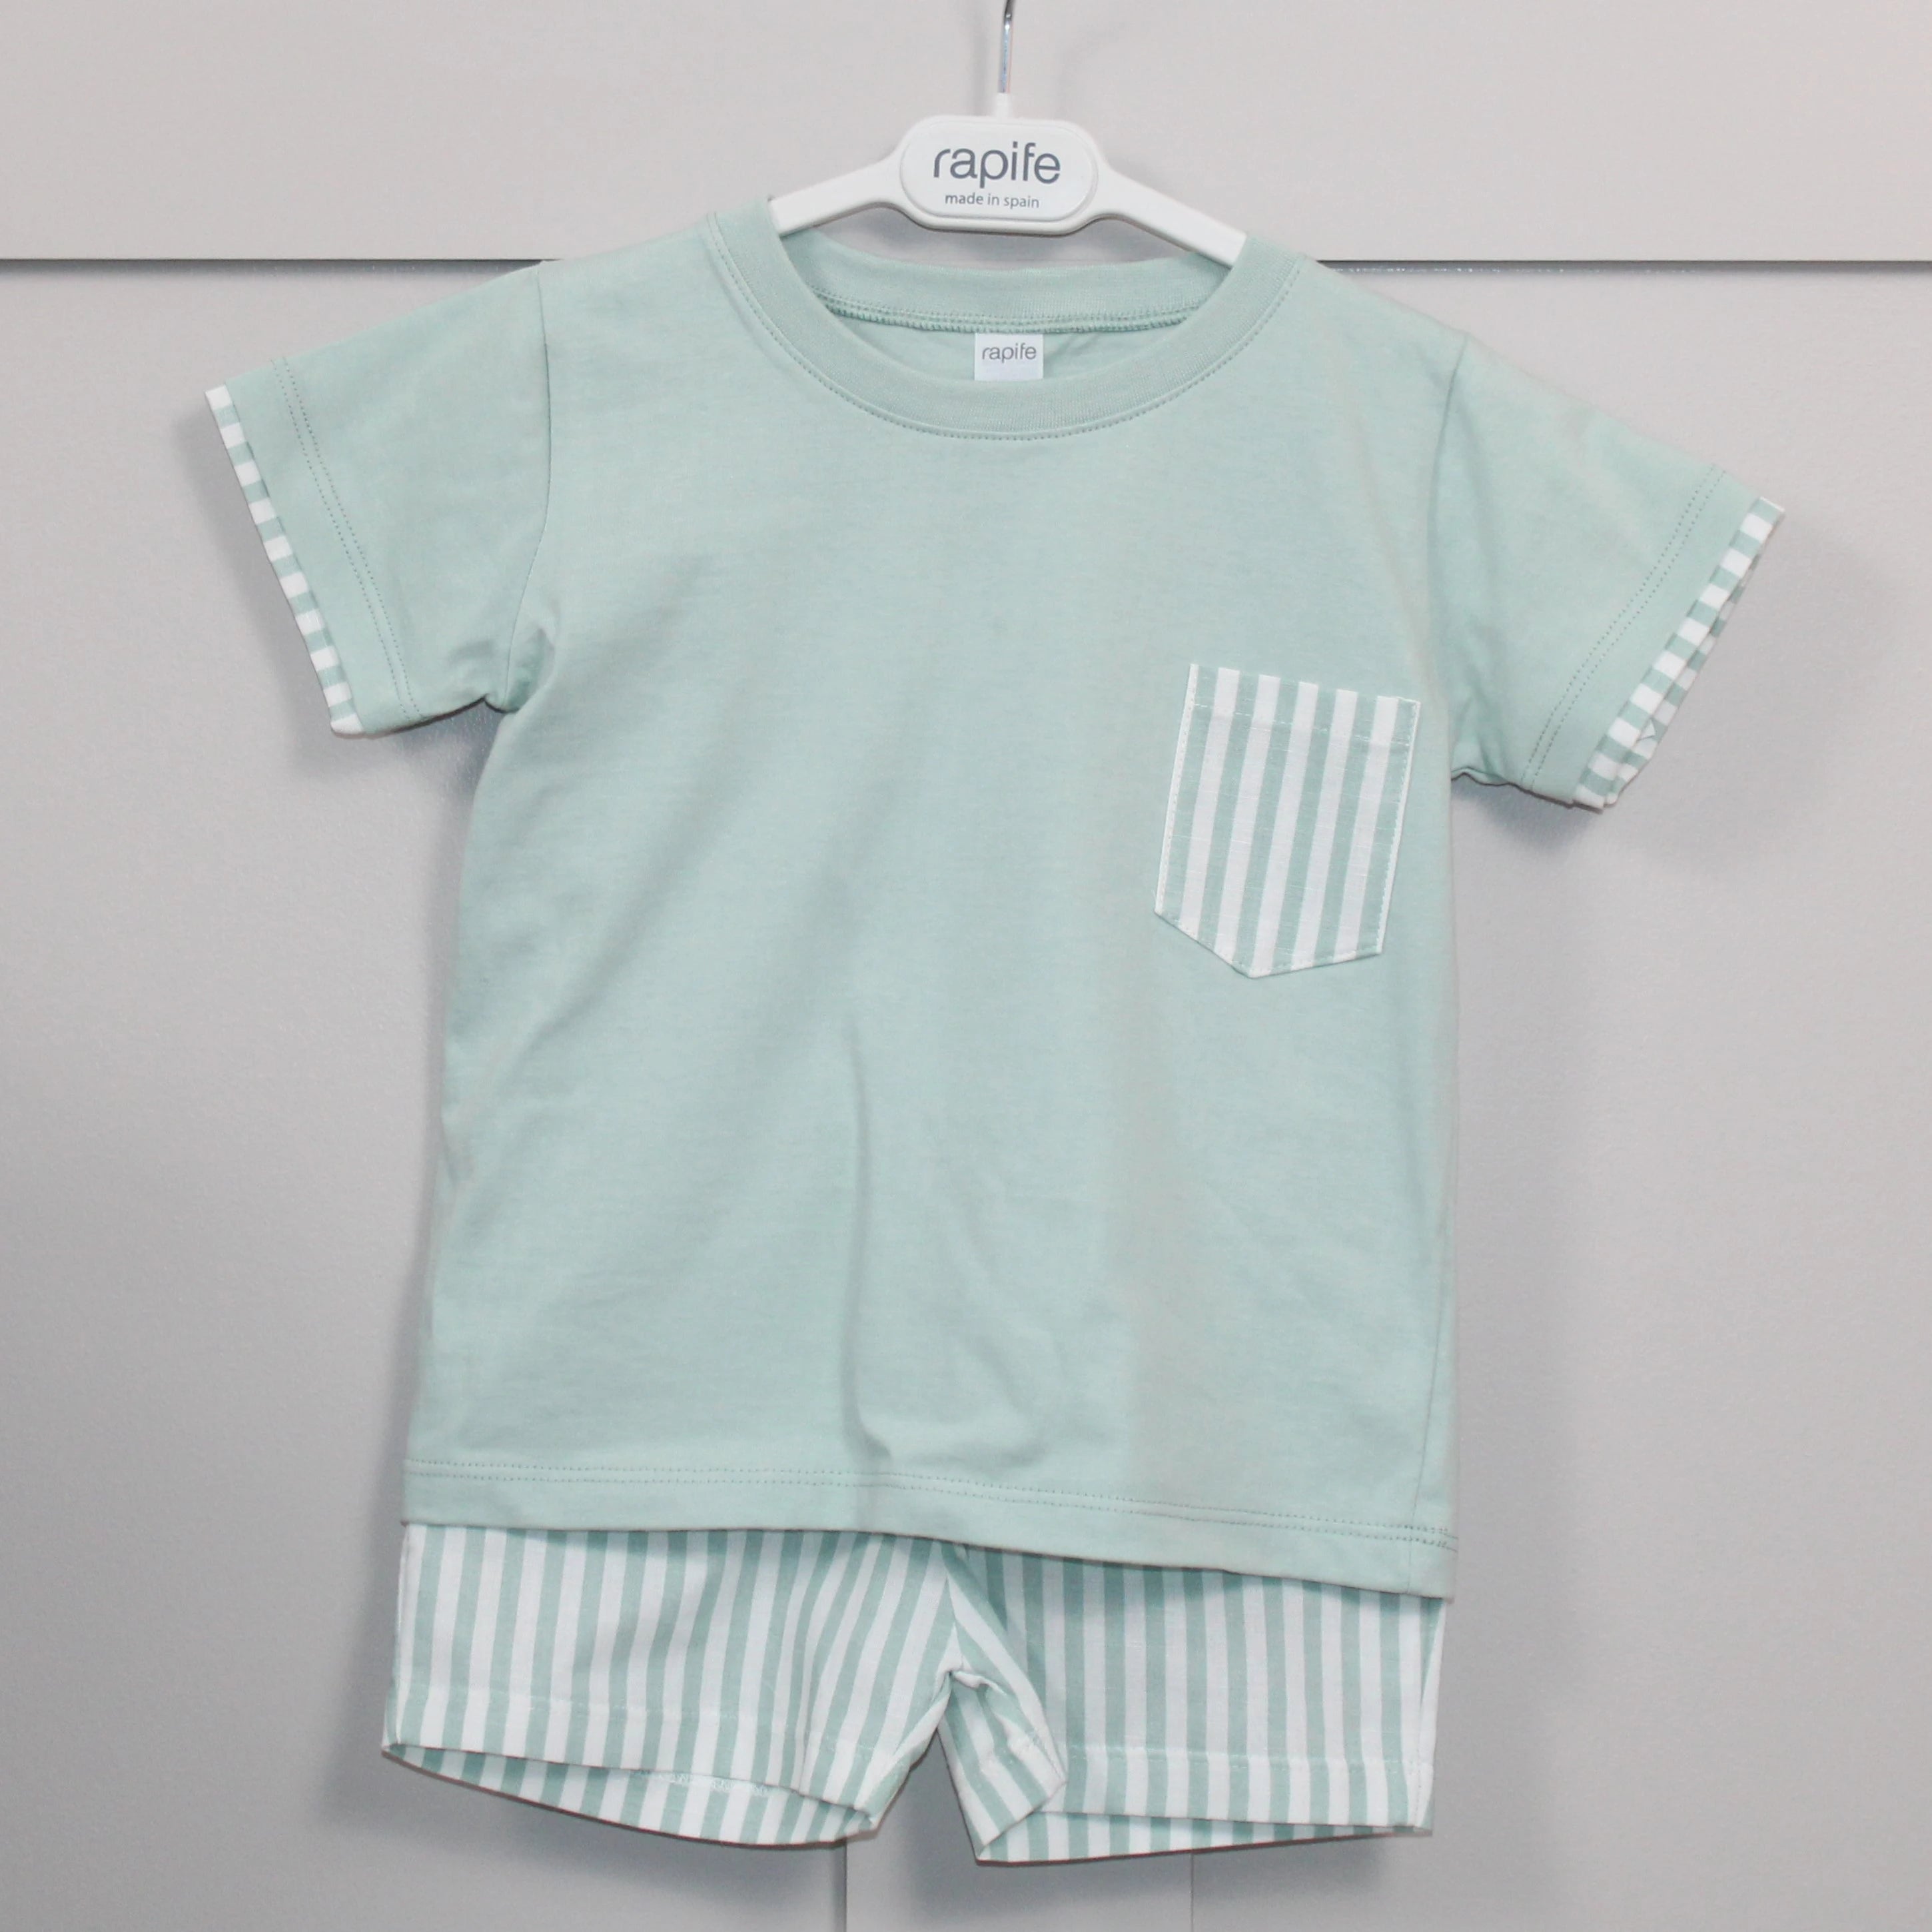 Rapife Mint striped t shirt and shorts set 